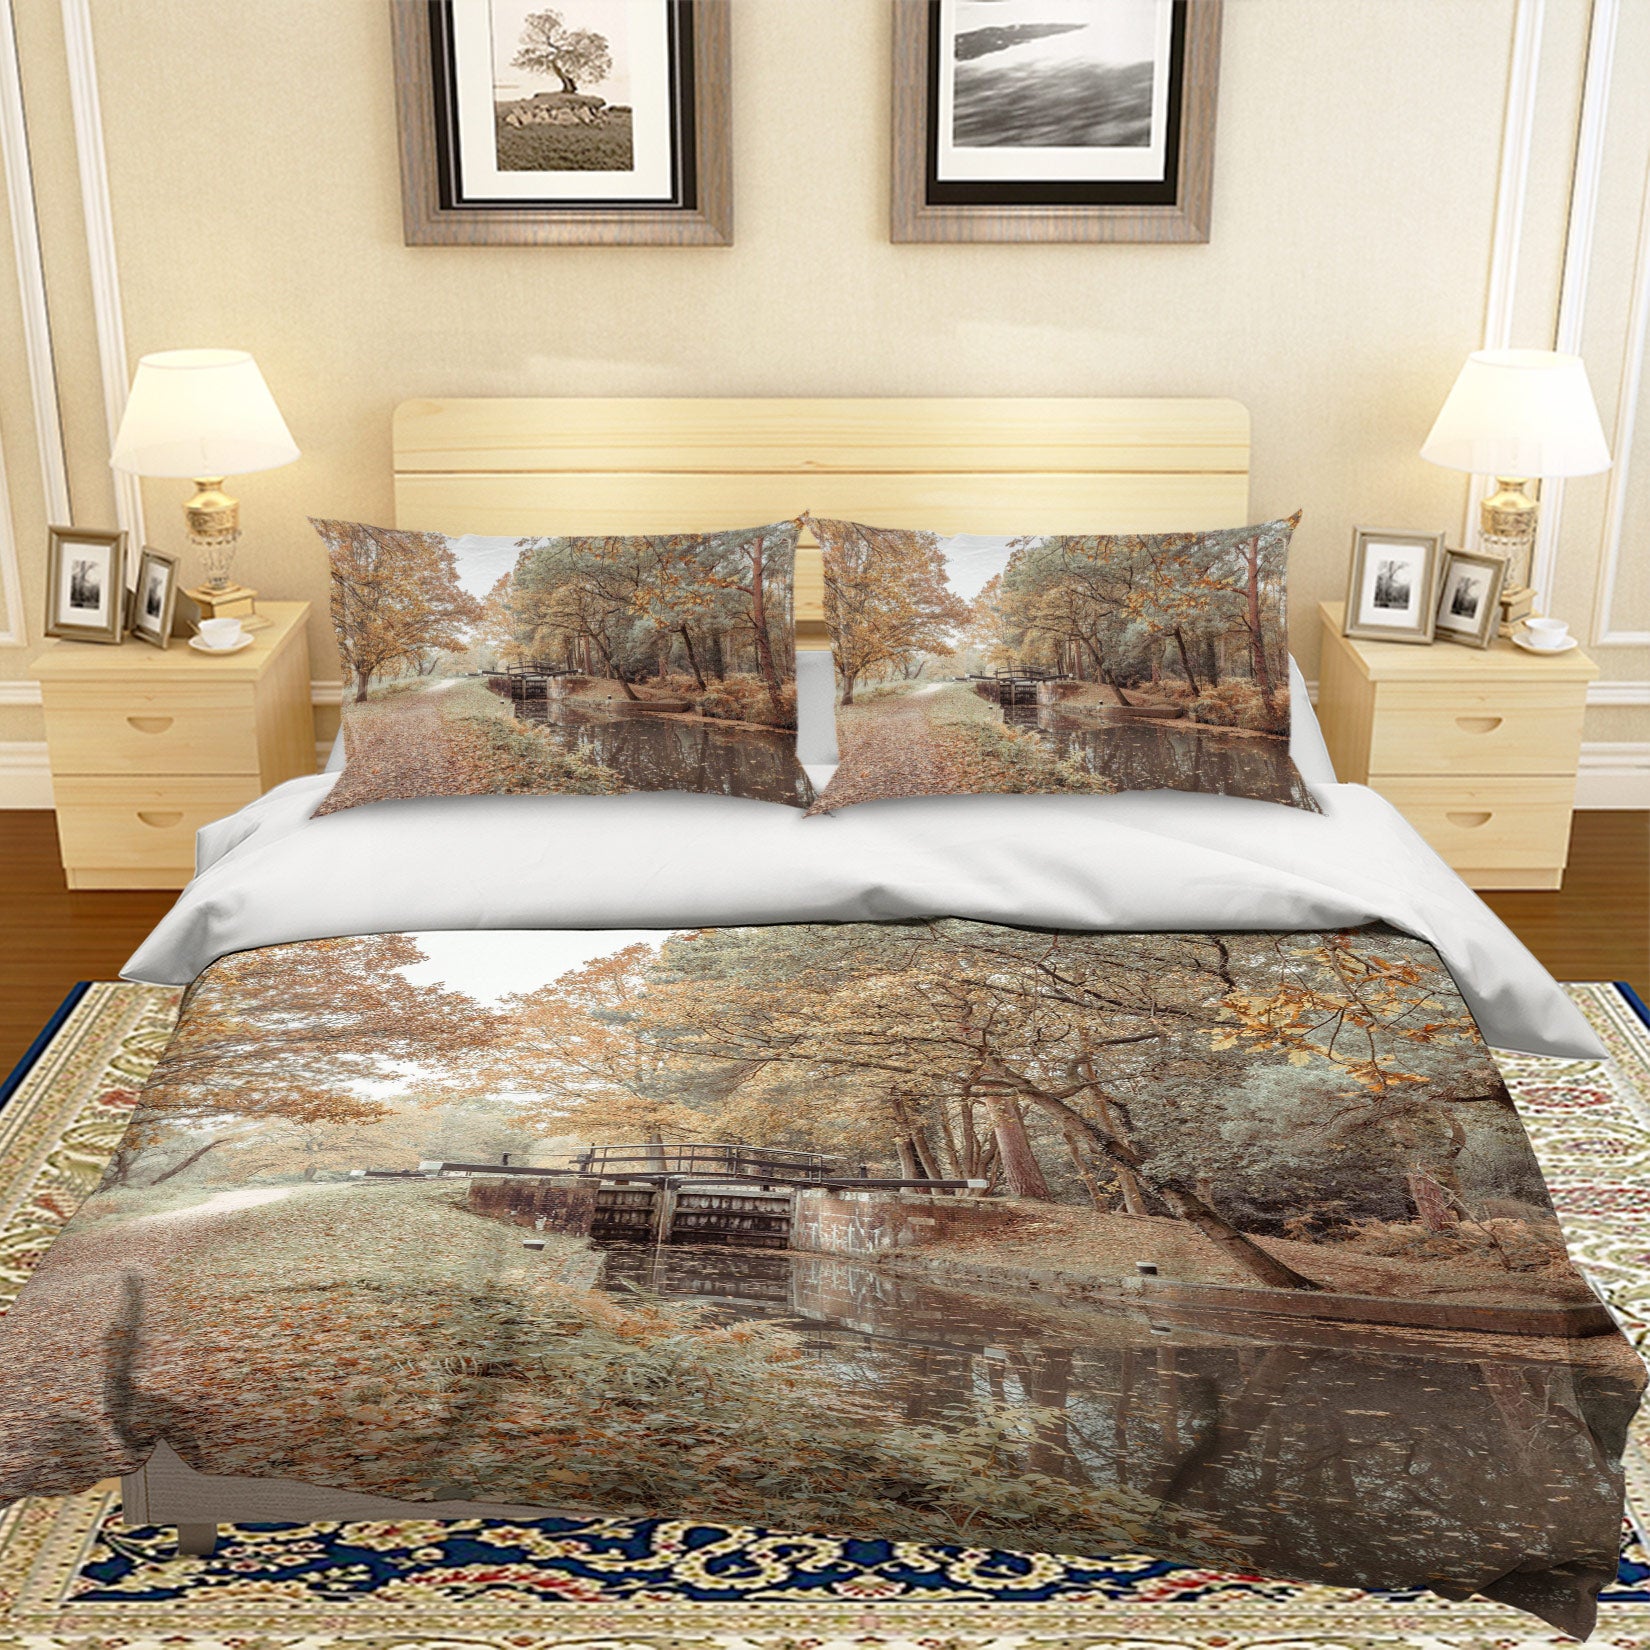 3D River Forest 1073 Assaf Frank Bedding Bed Pillowcases Quilt